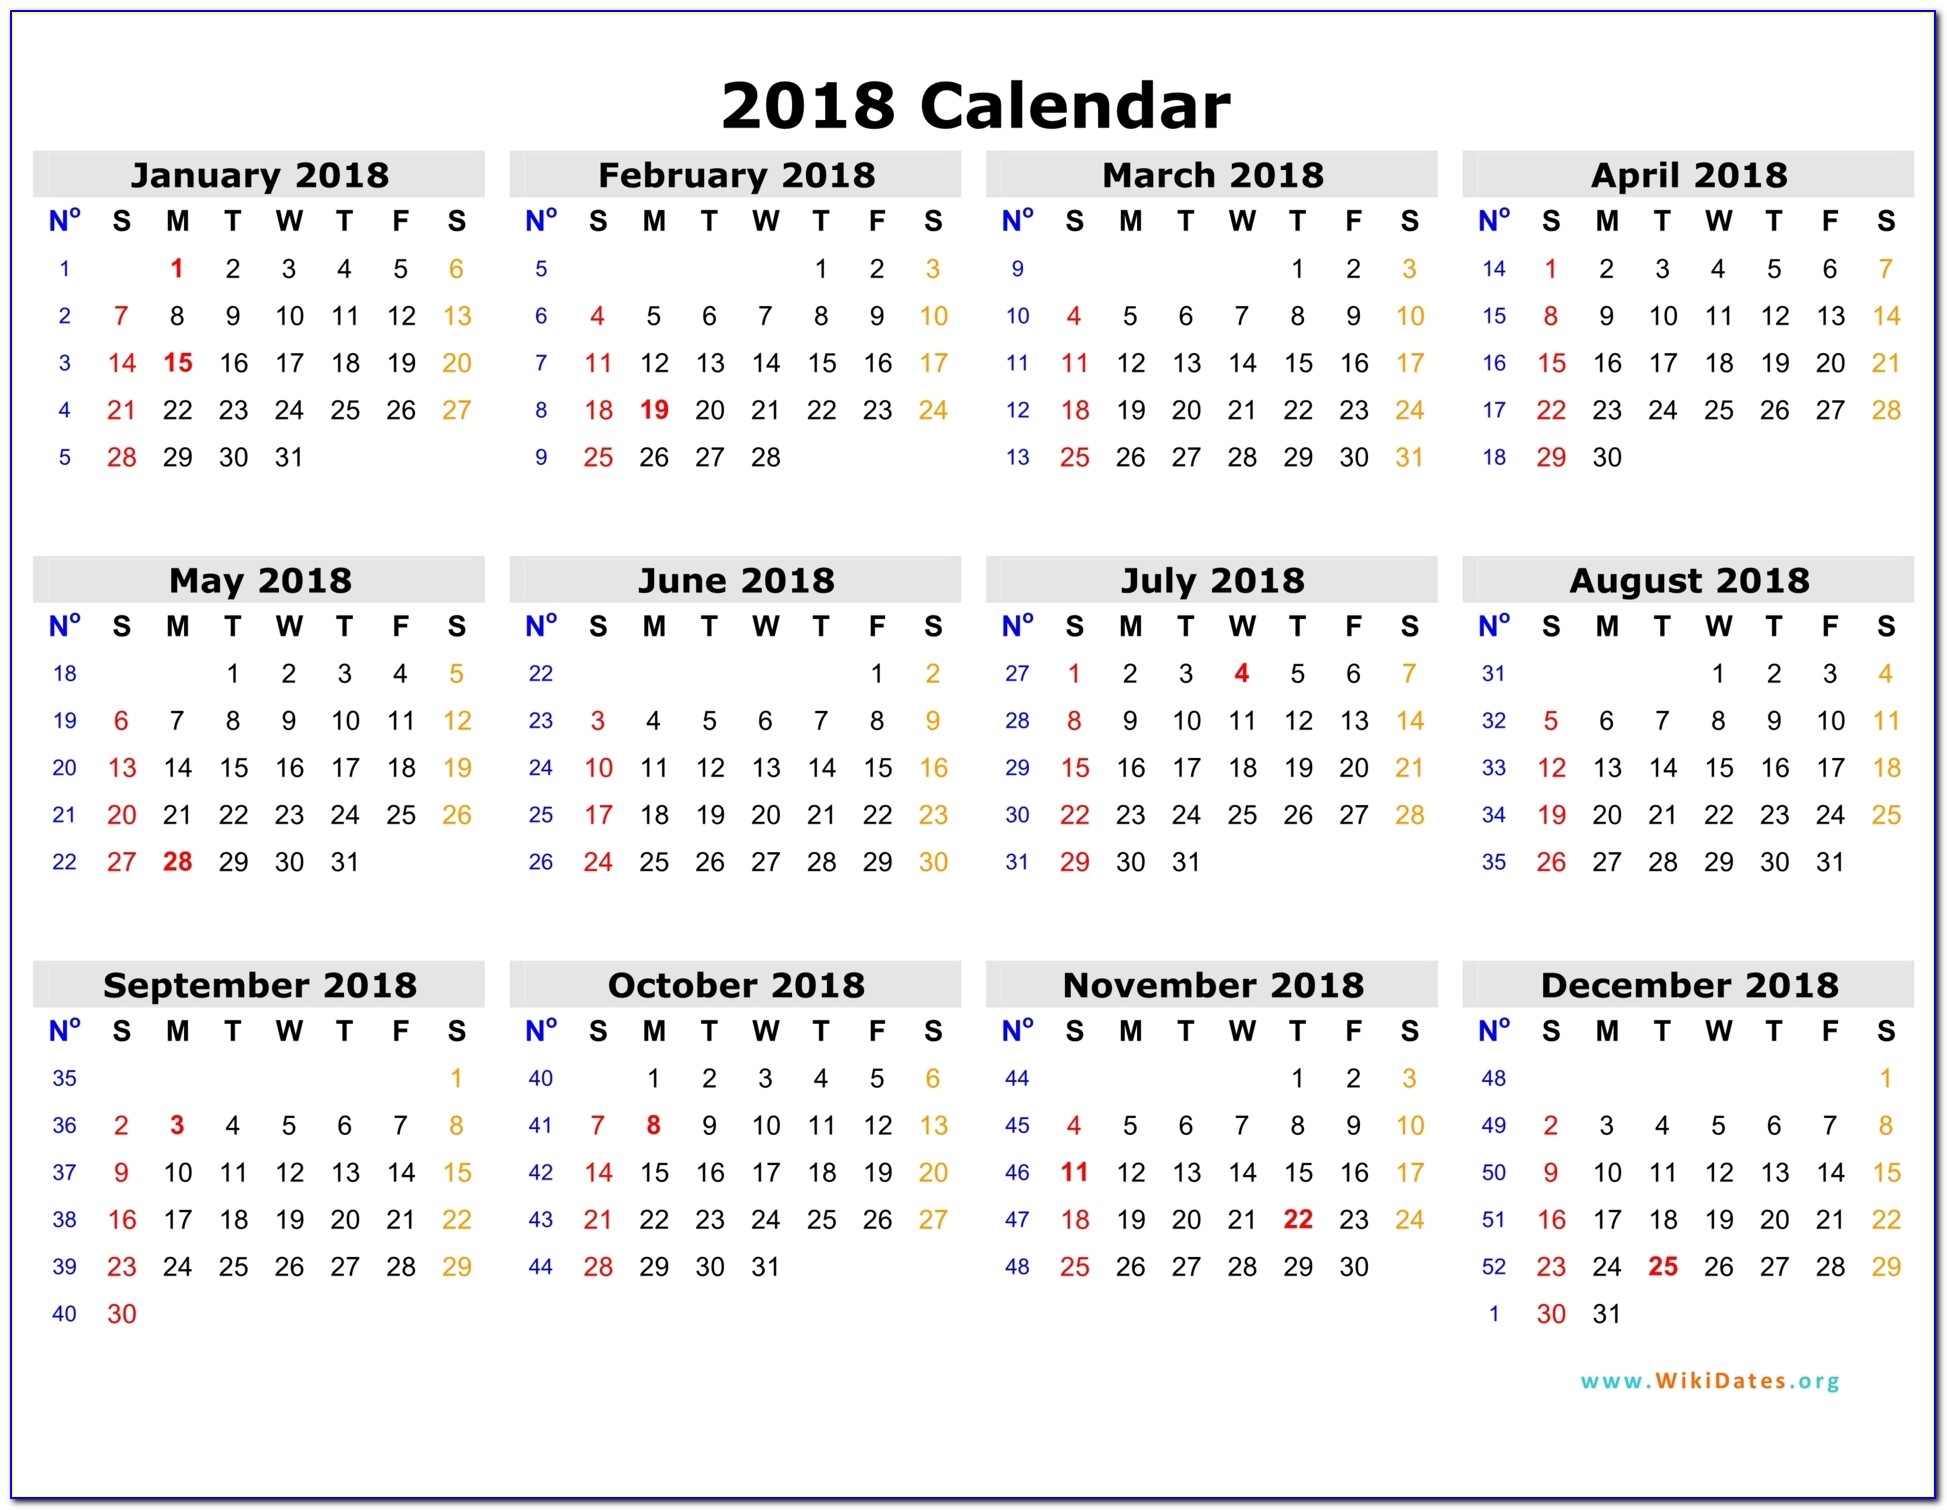 2016 Biweekly Payroll Calendar Template